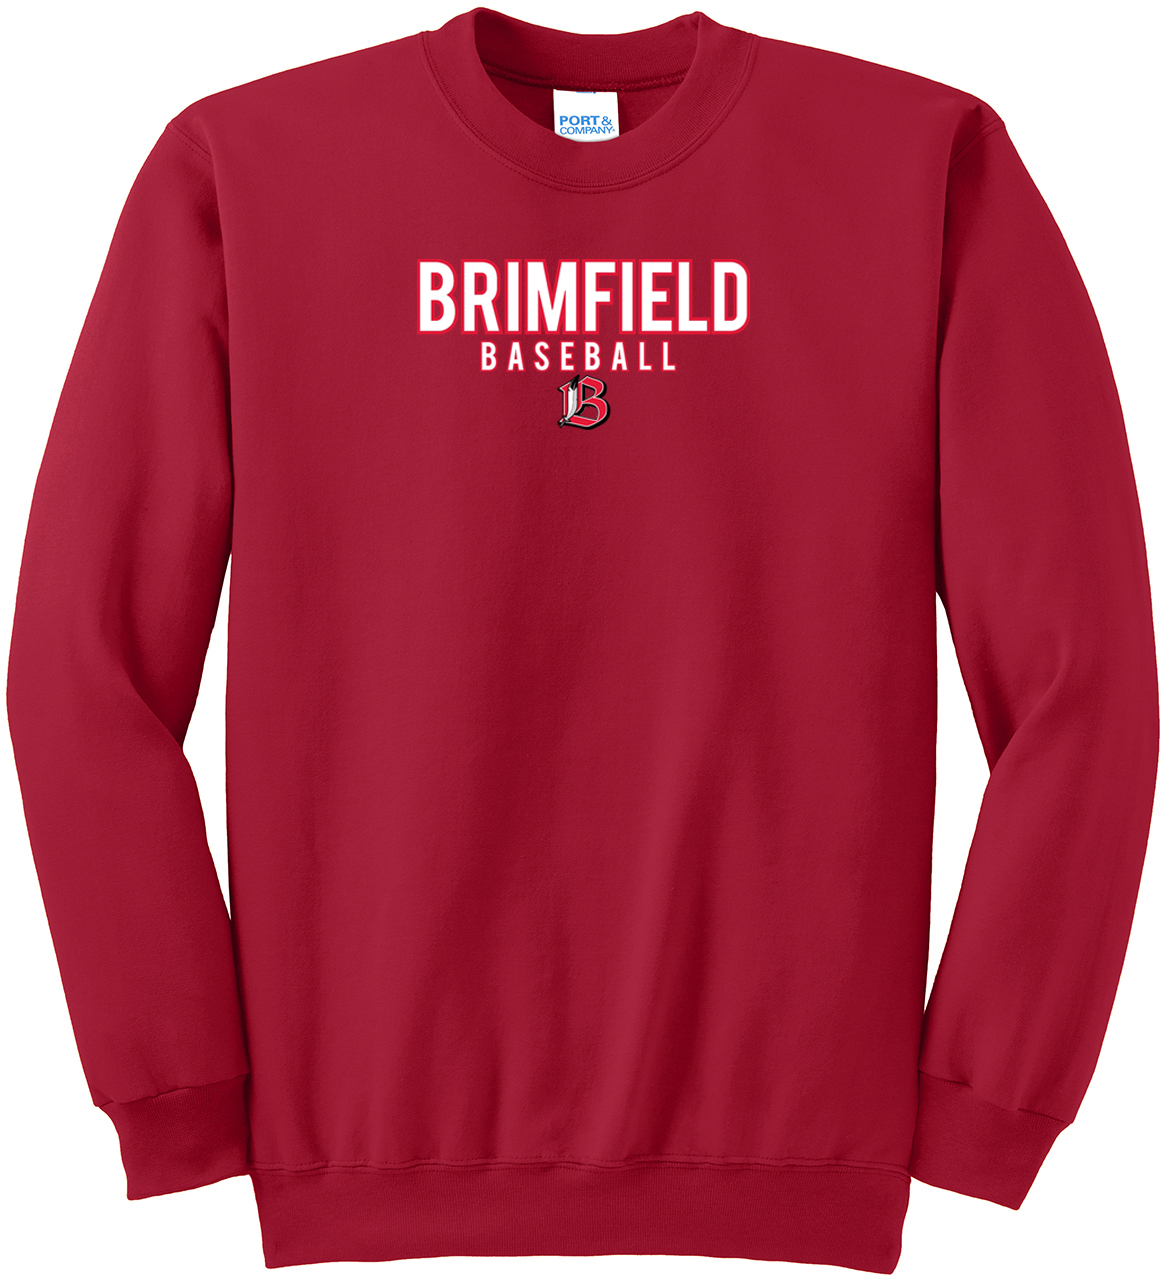 Brimfield Baseball Crew Neck Sweater